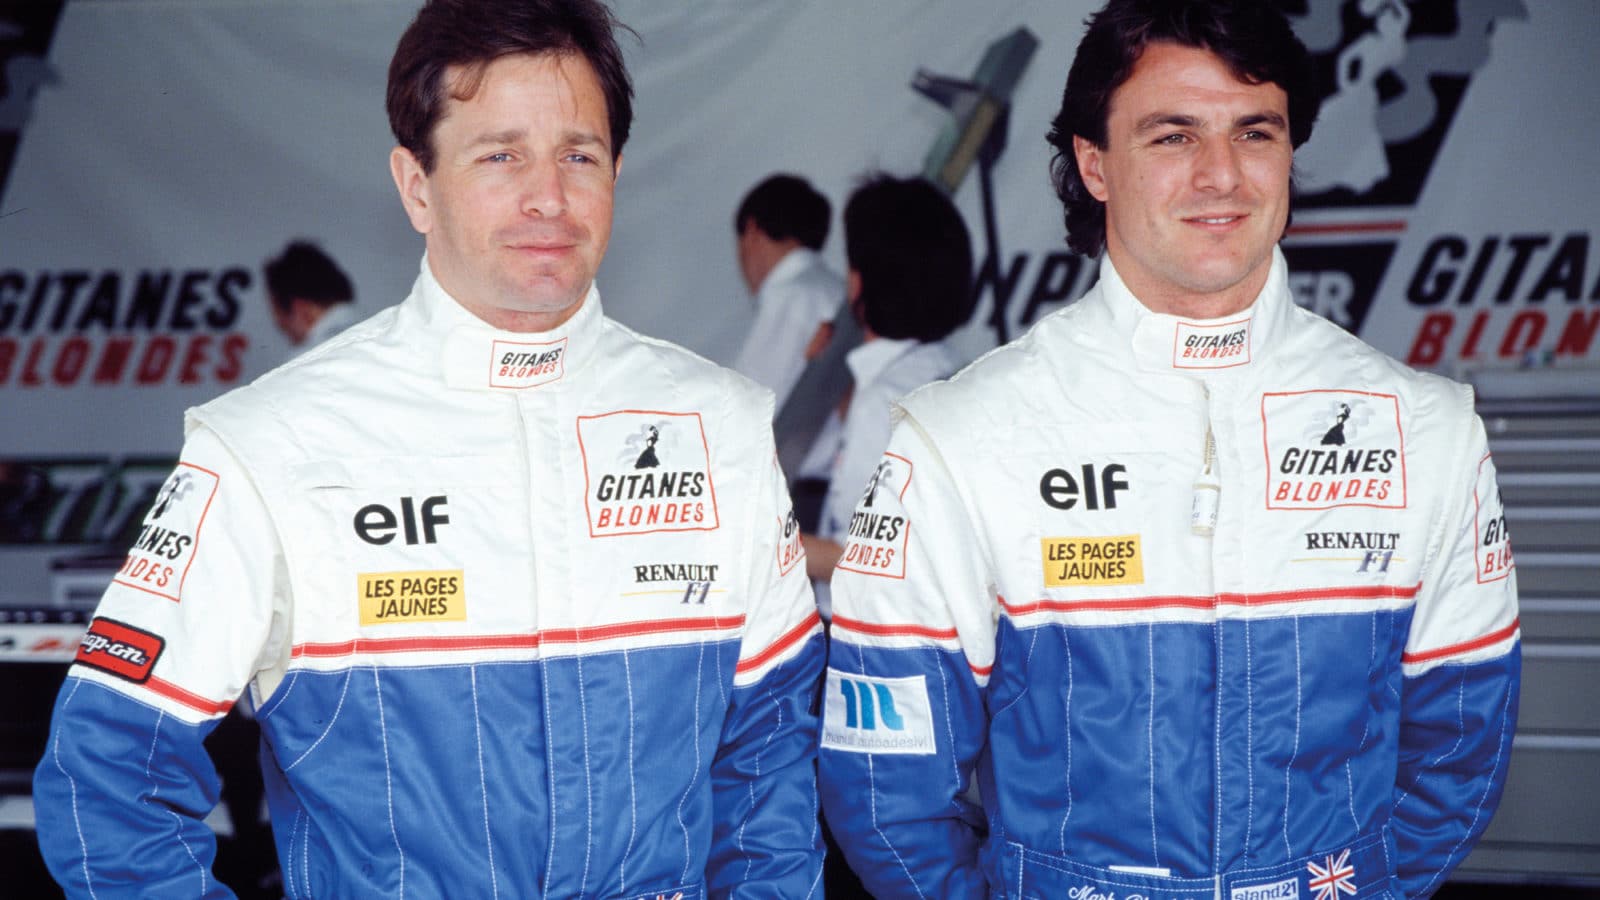 Ligier team mates Martin Brundle and Mark Blundell